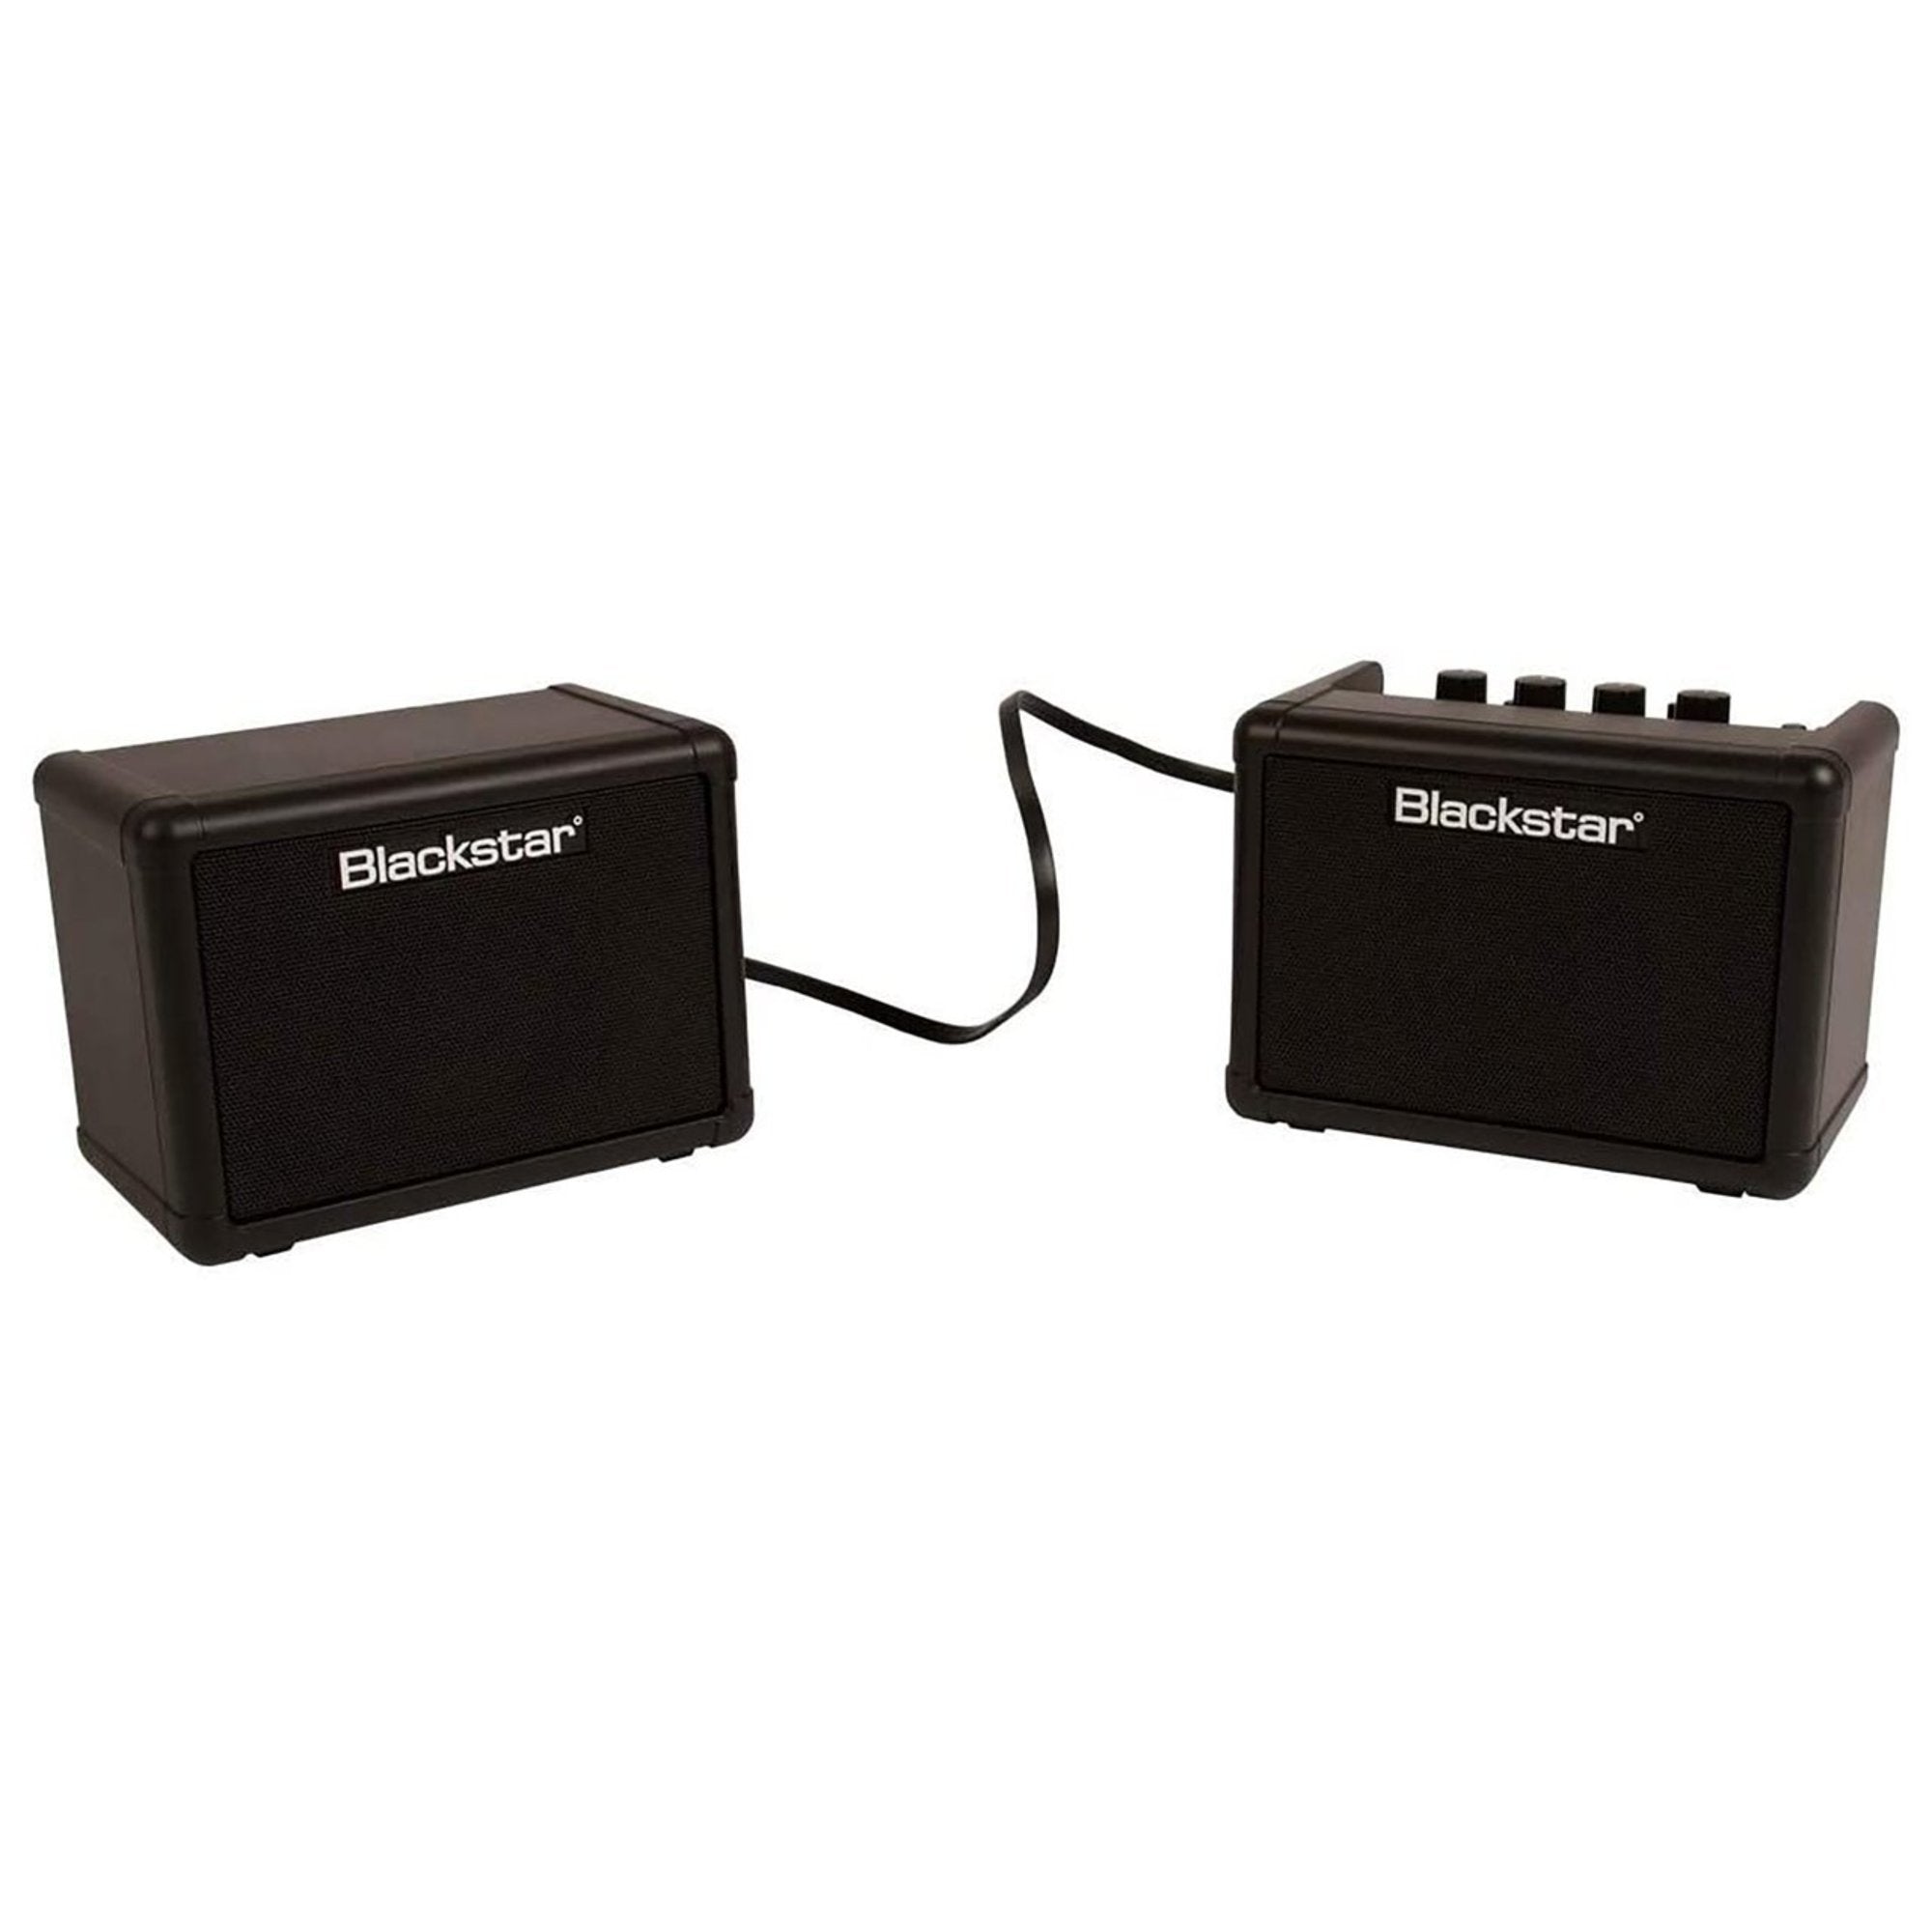 Blackstar, Blackstar FLY 3 Mini Guitar Combo Amplifier with Extension Cab